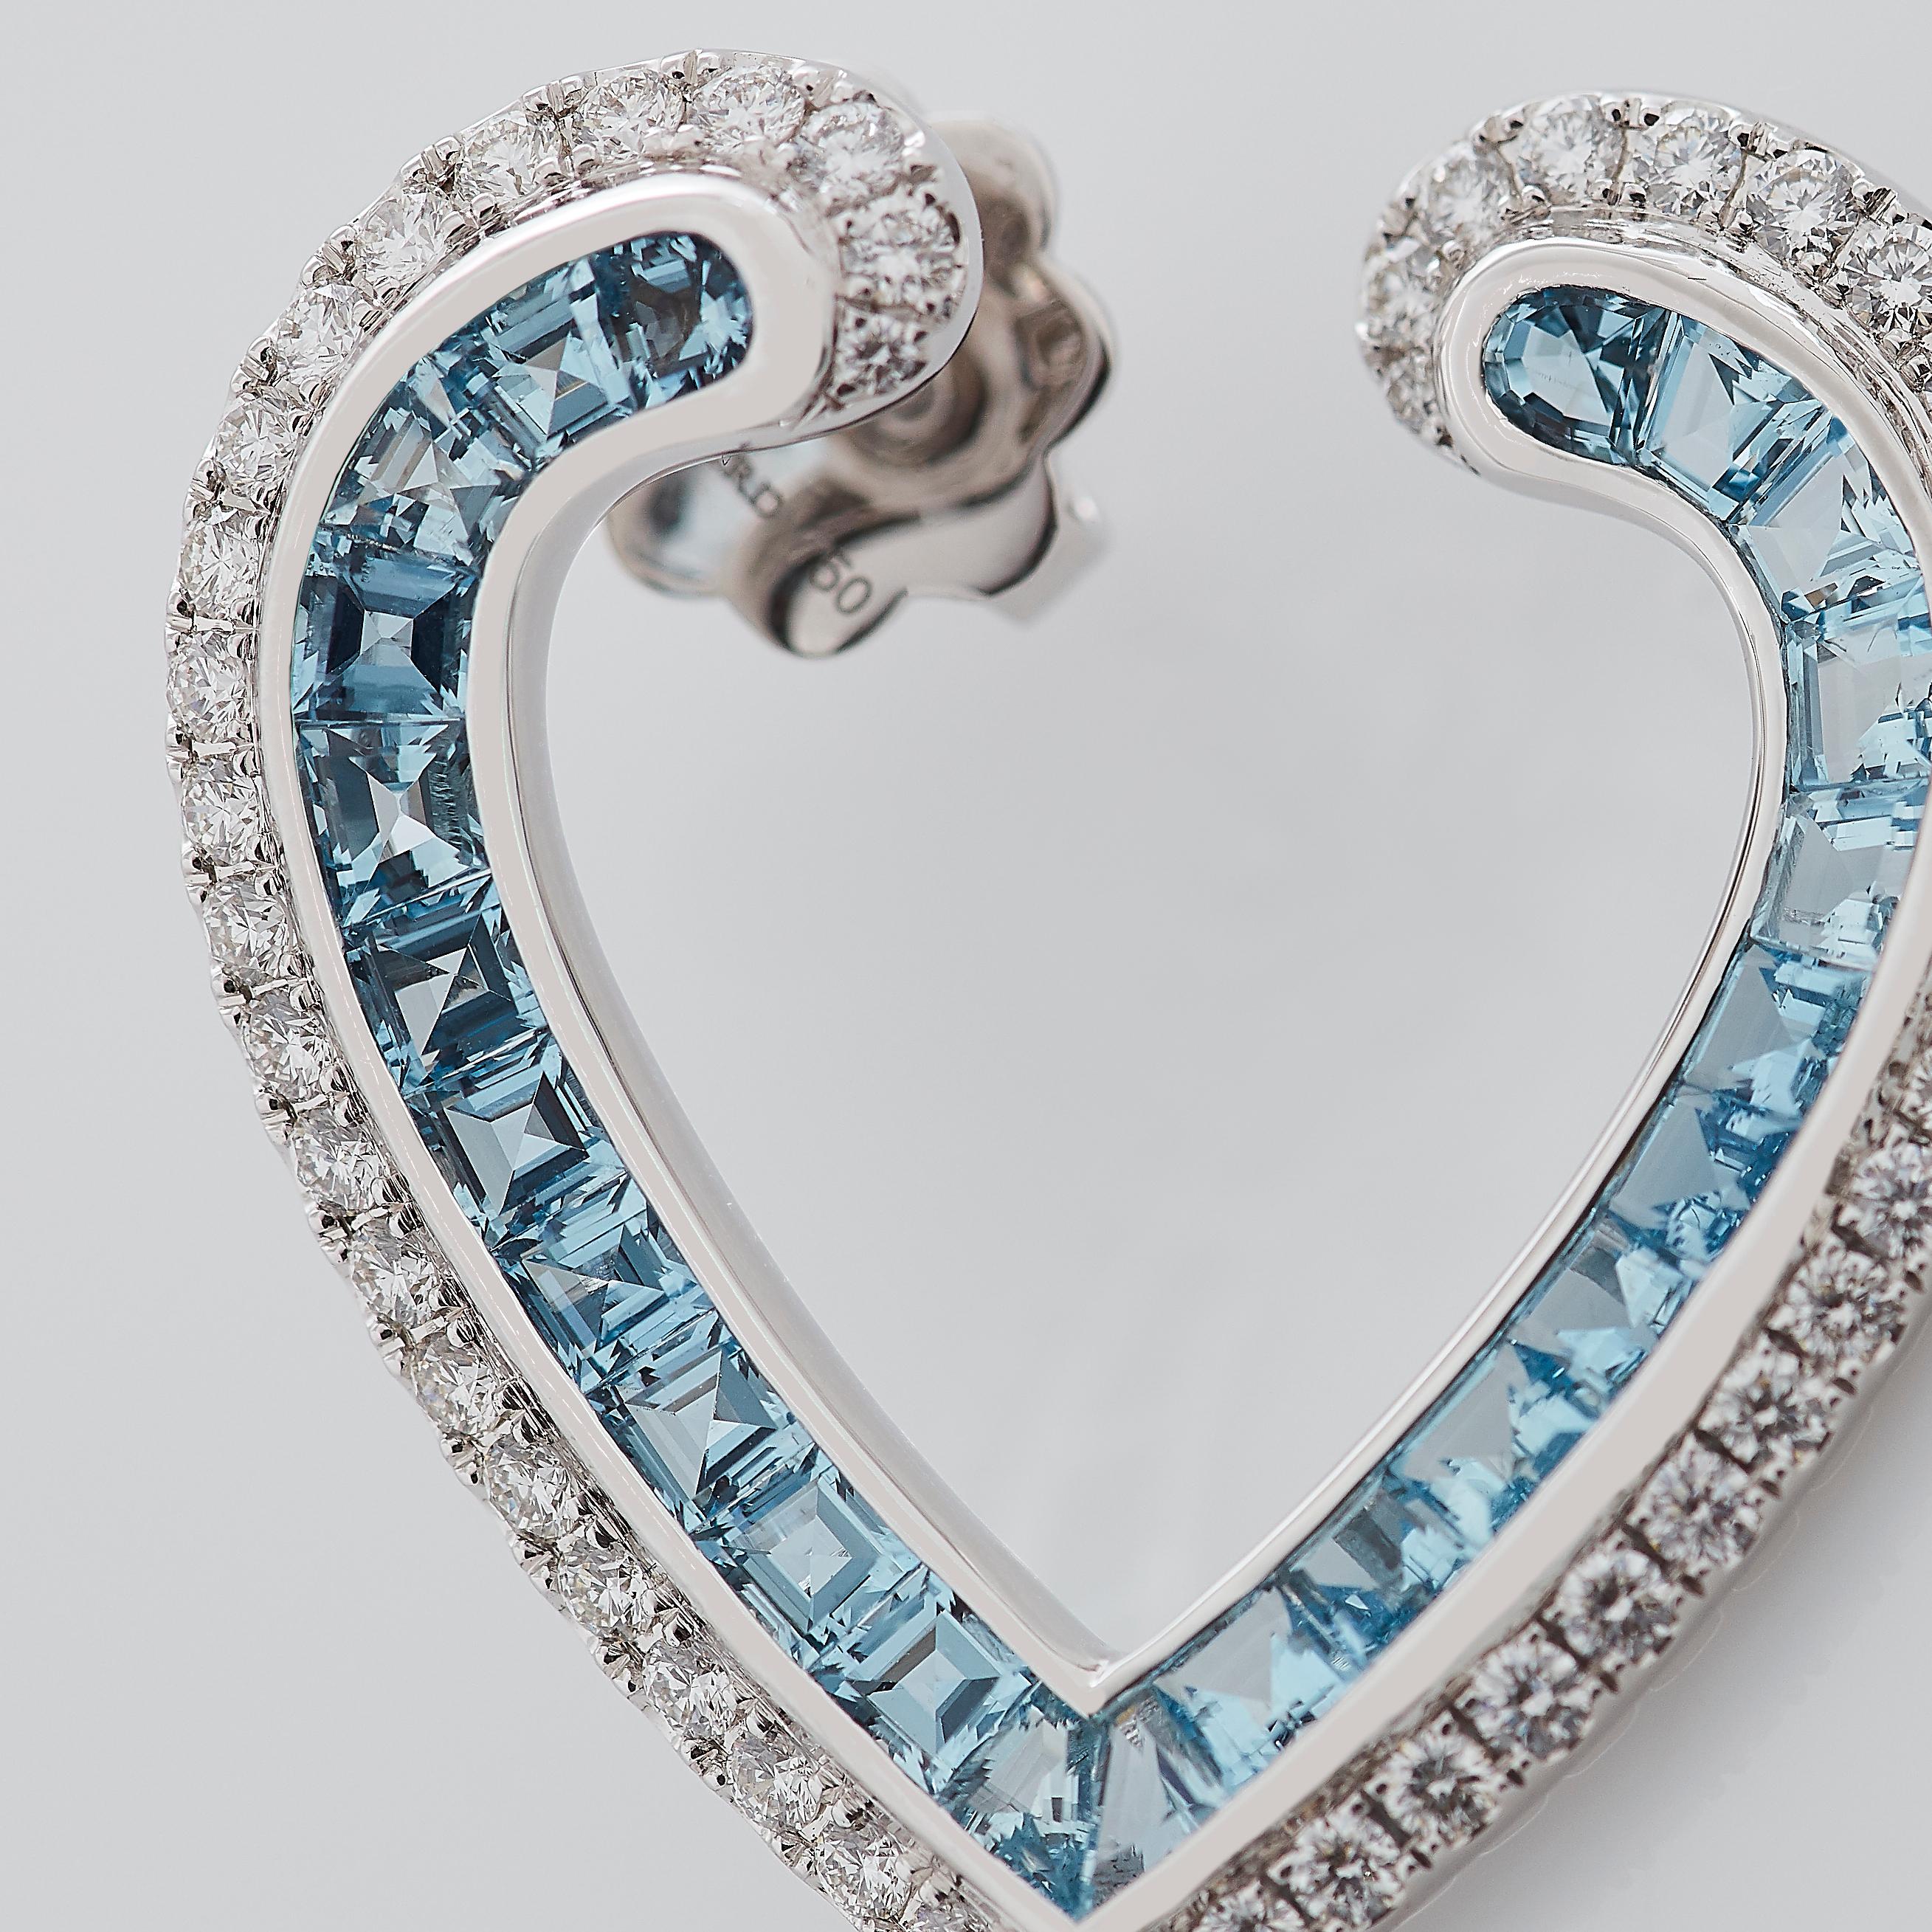 Garrard 'Aloria' 18 Karat White Gold Calibre Cut Aquamarine Diamond Earrings For Sale 3